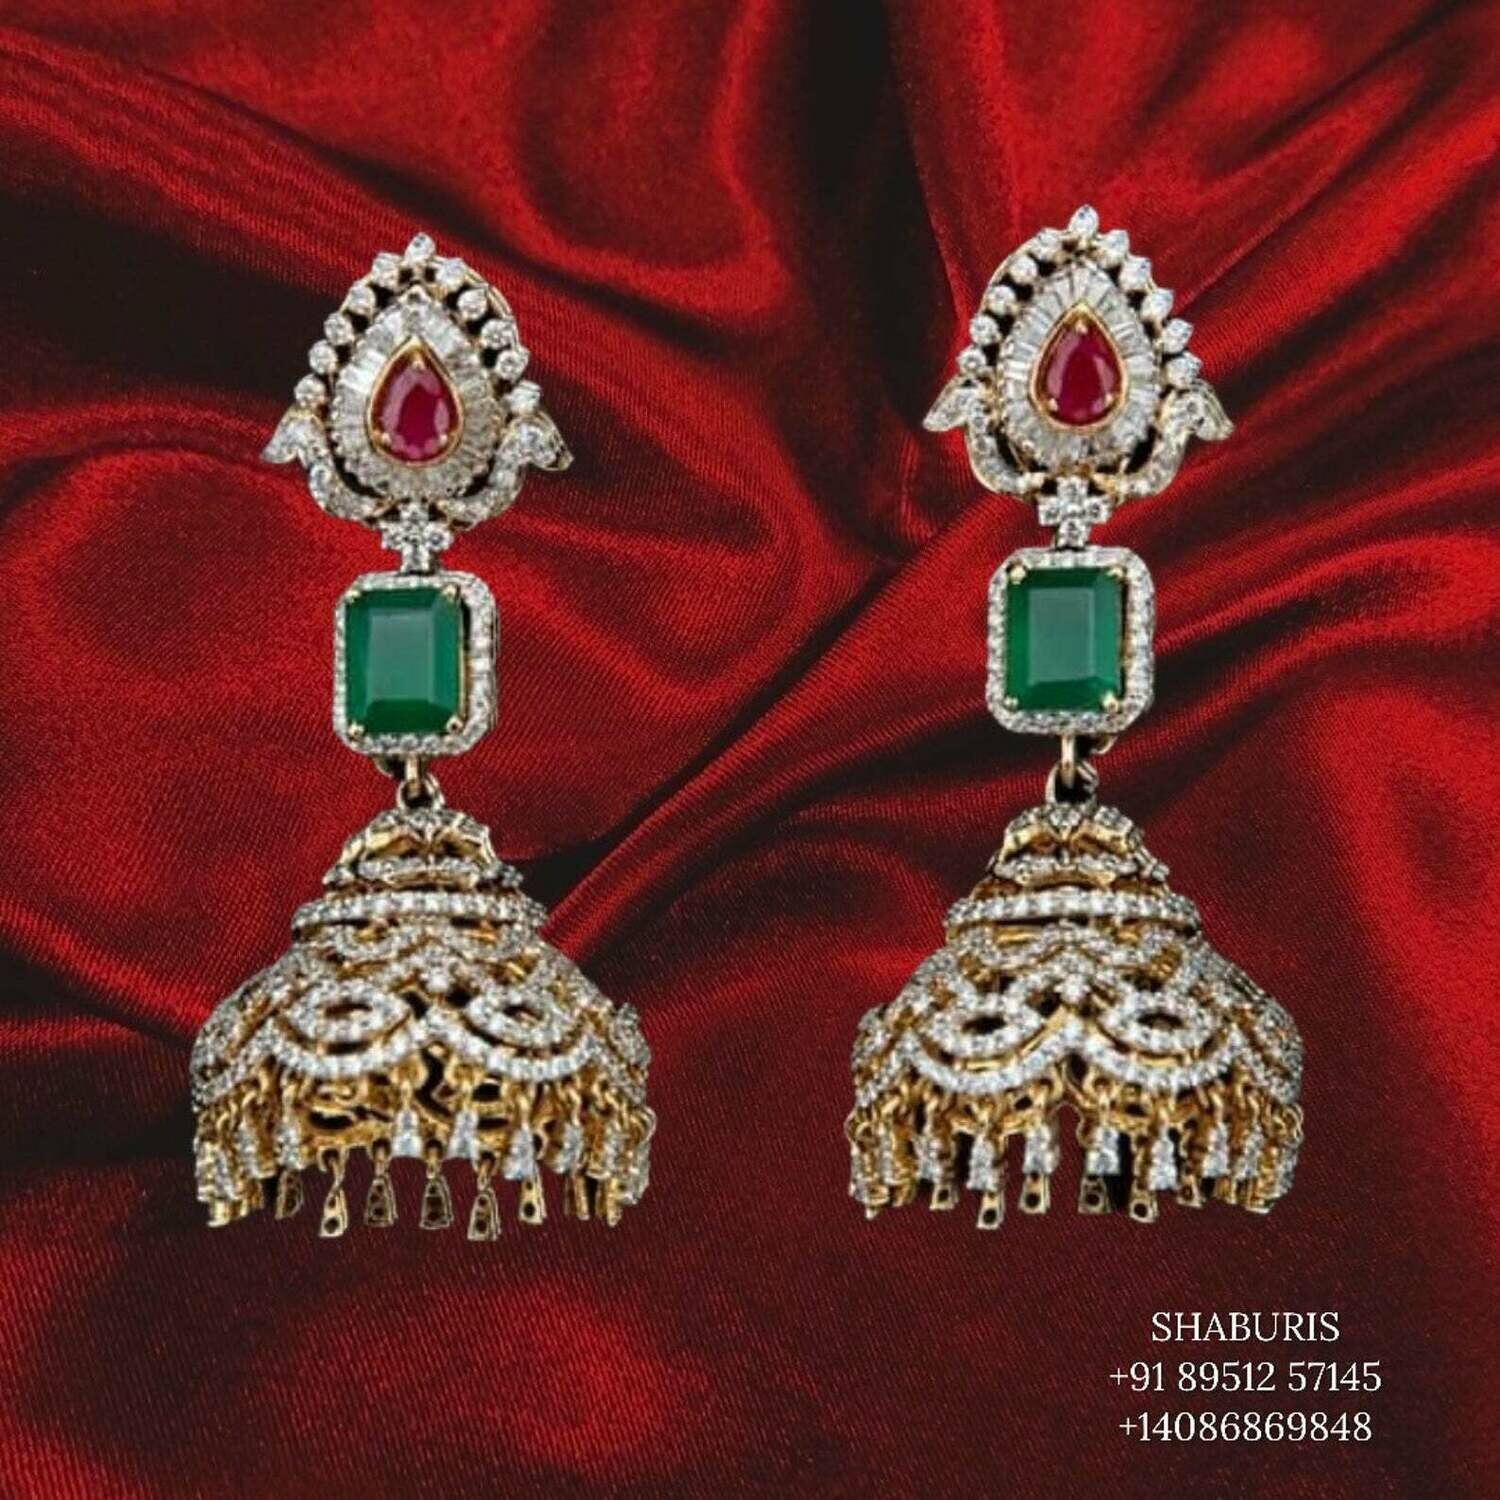 Pure Silver Jewelry Indian ,diamond jhunka,Big Indian earrings,Indian Bridal,Indian Wedding Jewelry,pure Silver jewelry-NIHIRA-SHABURIS